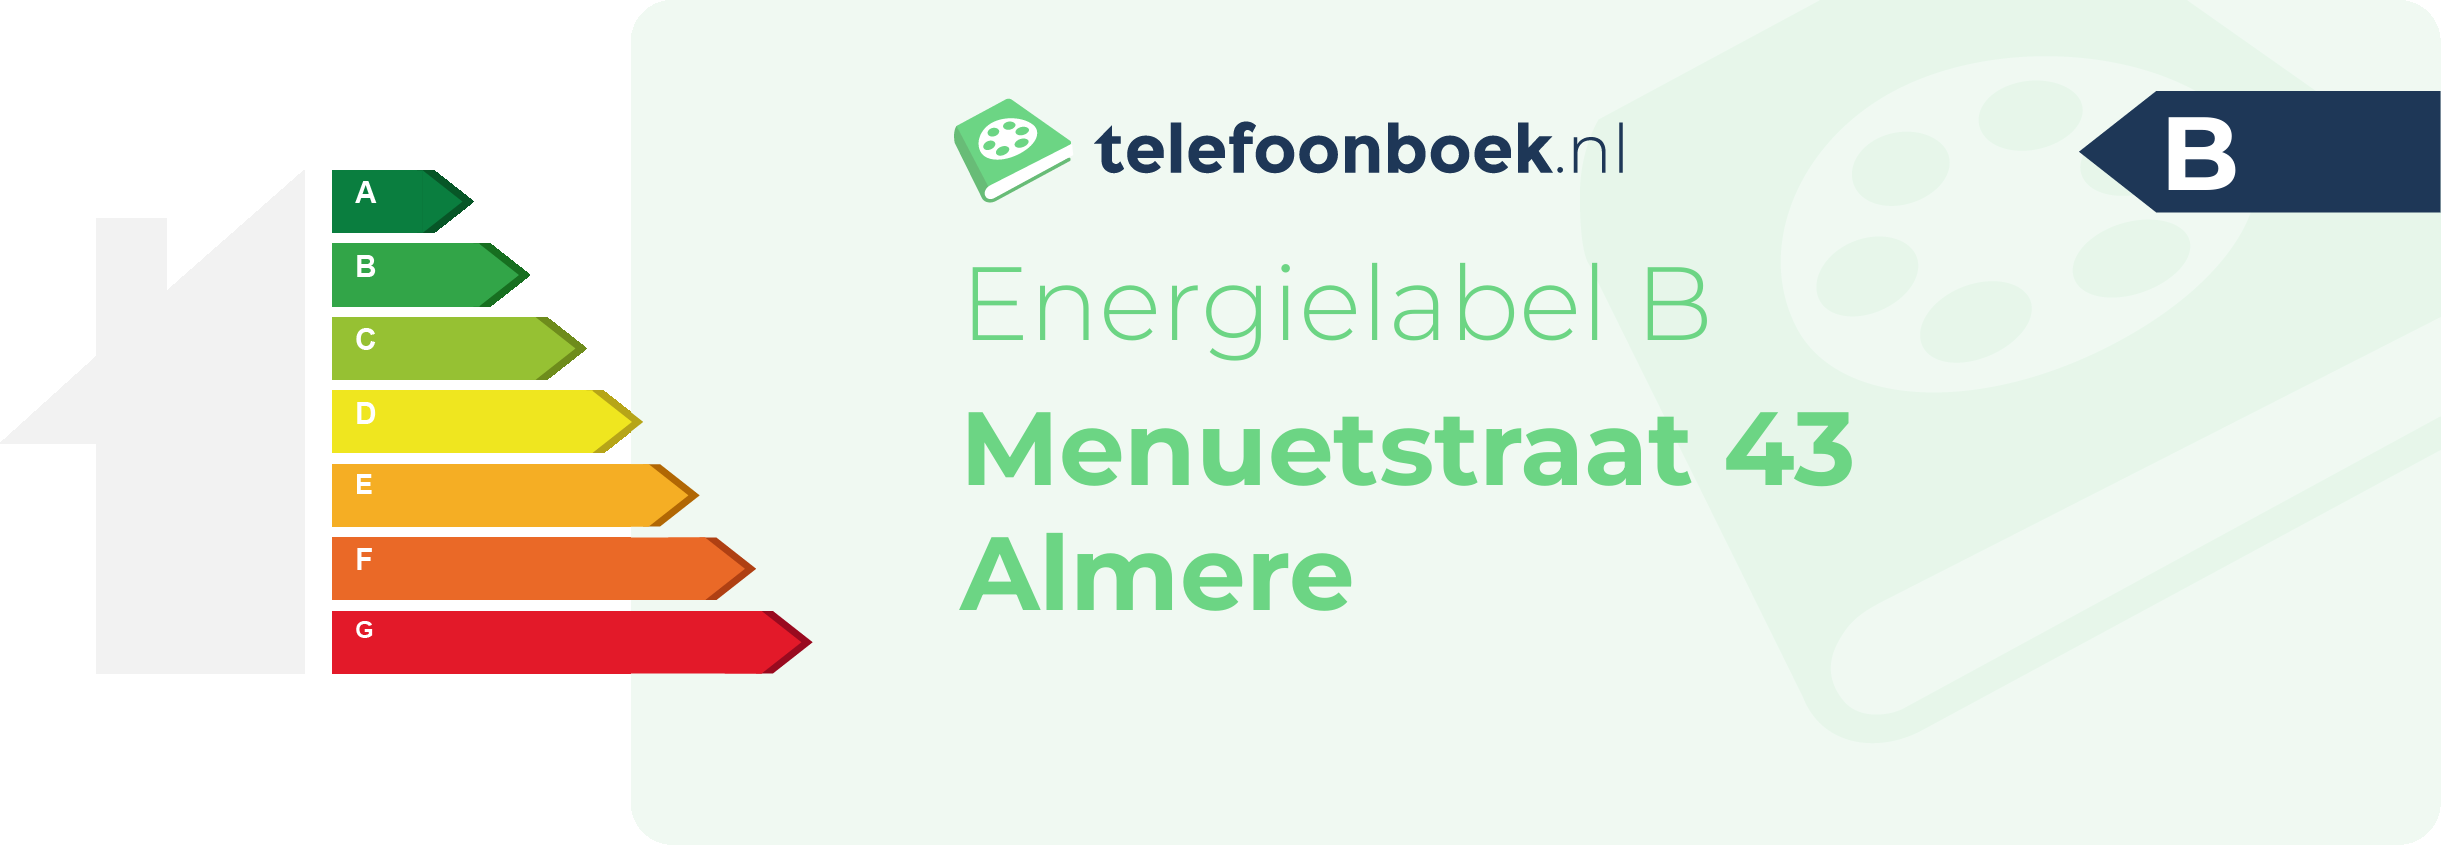 Energielabel Menuetstraat 43 Almere